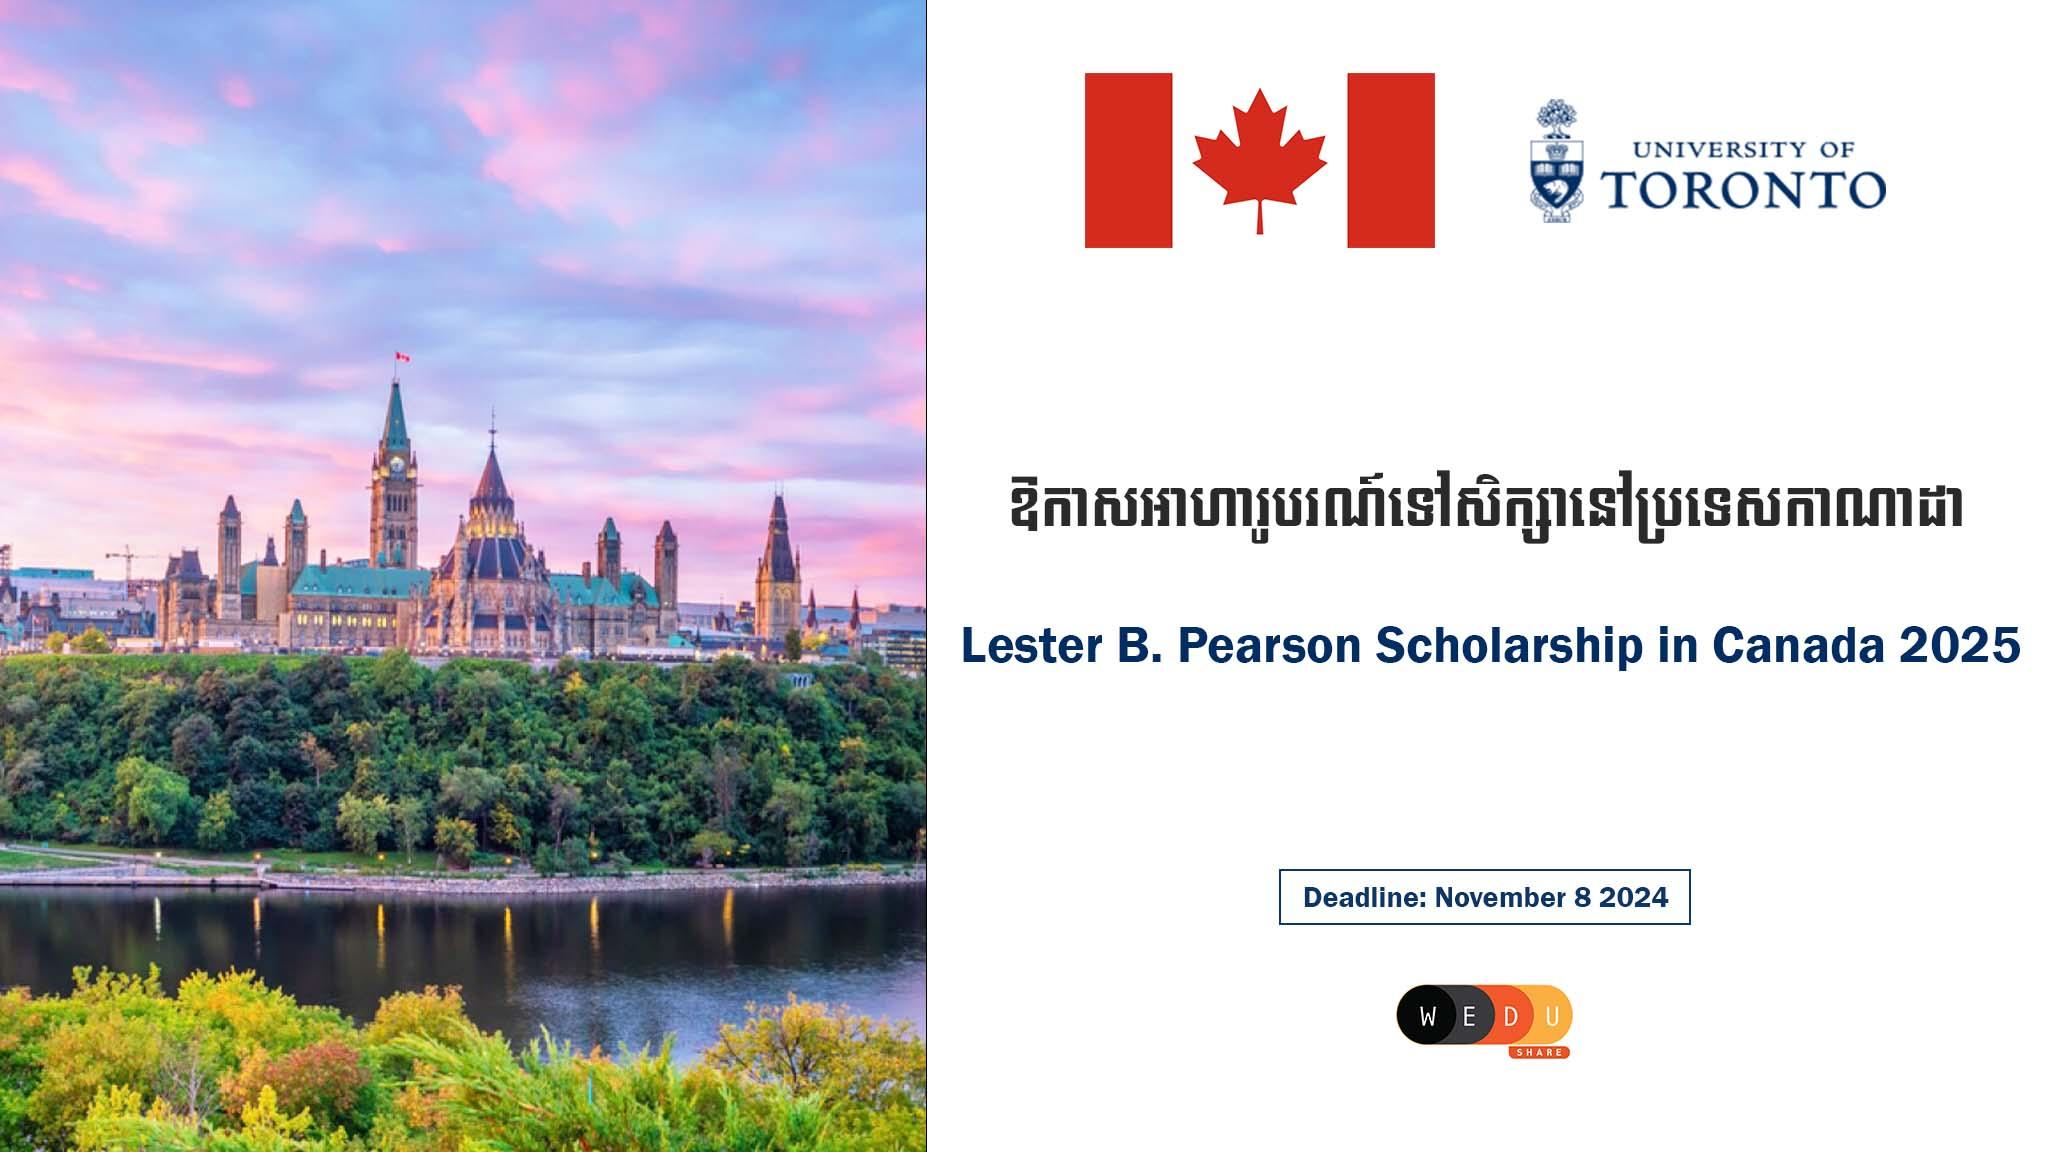 Lester B. Pearson Scholarship in Canada 2025